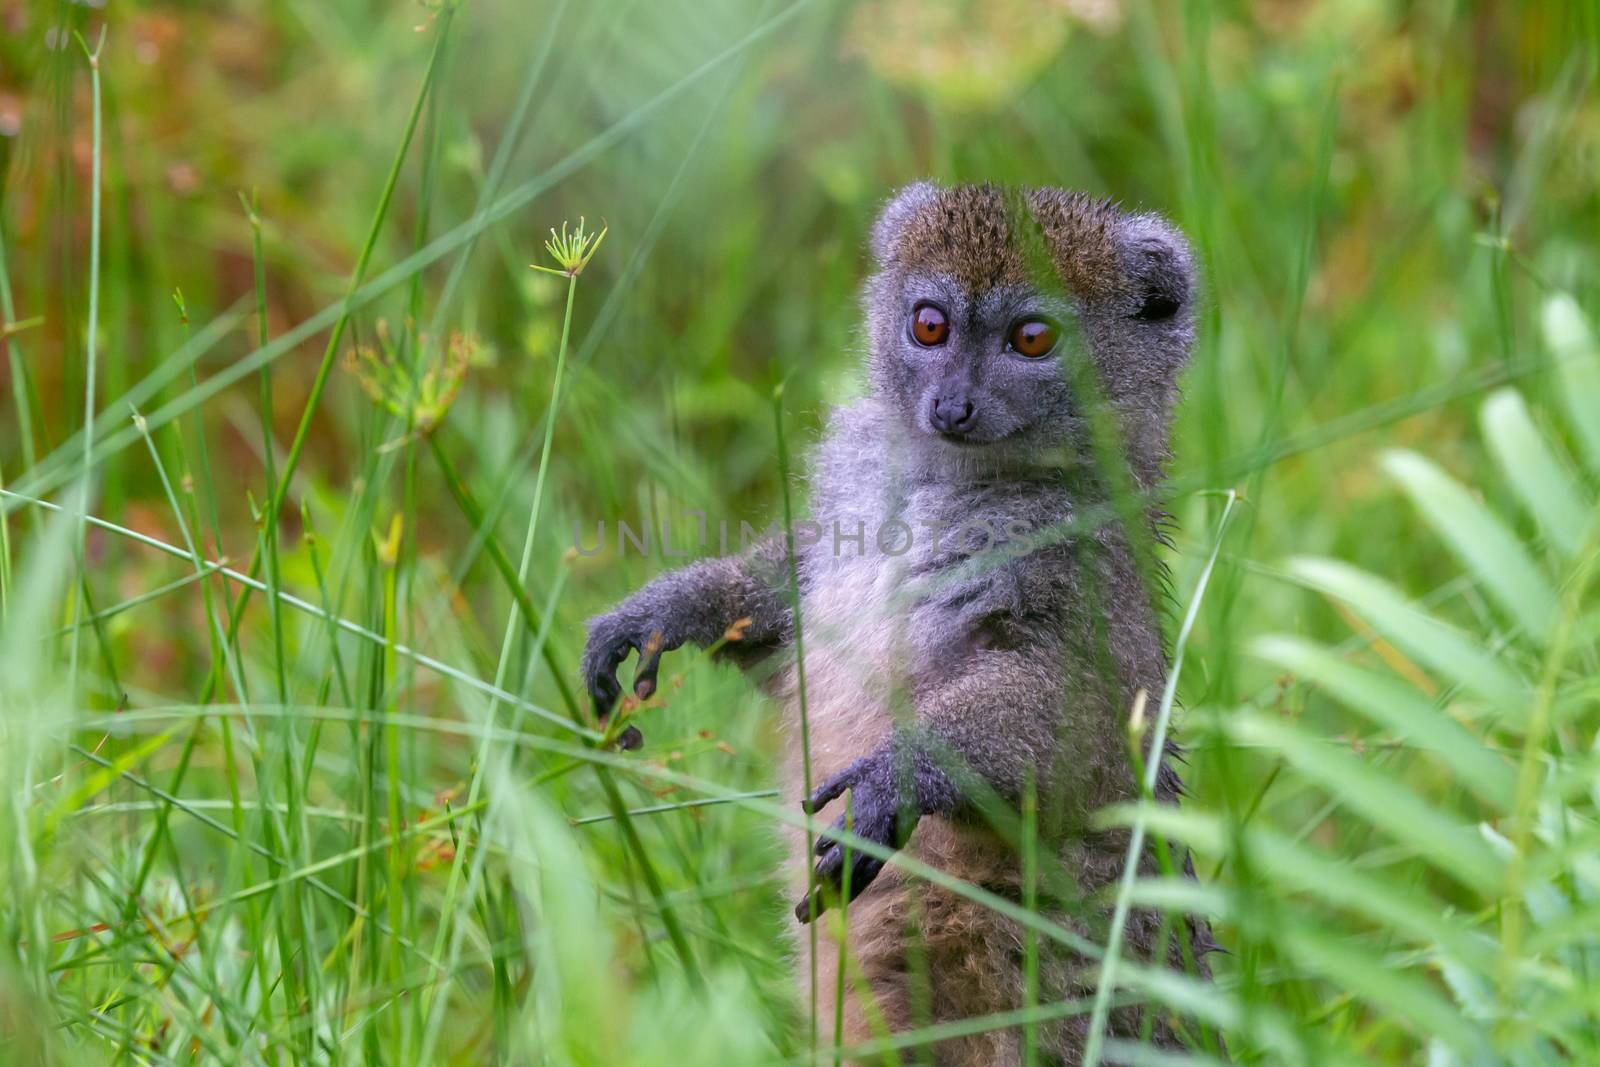 A bamboo lemur between the tall grass looks curious by 25ehaag6